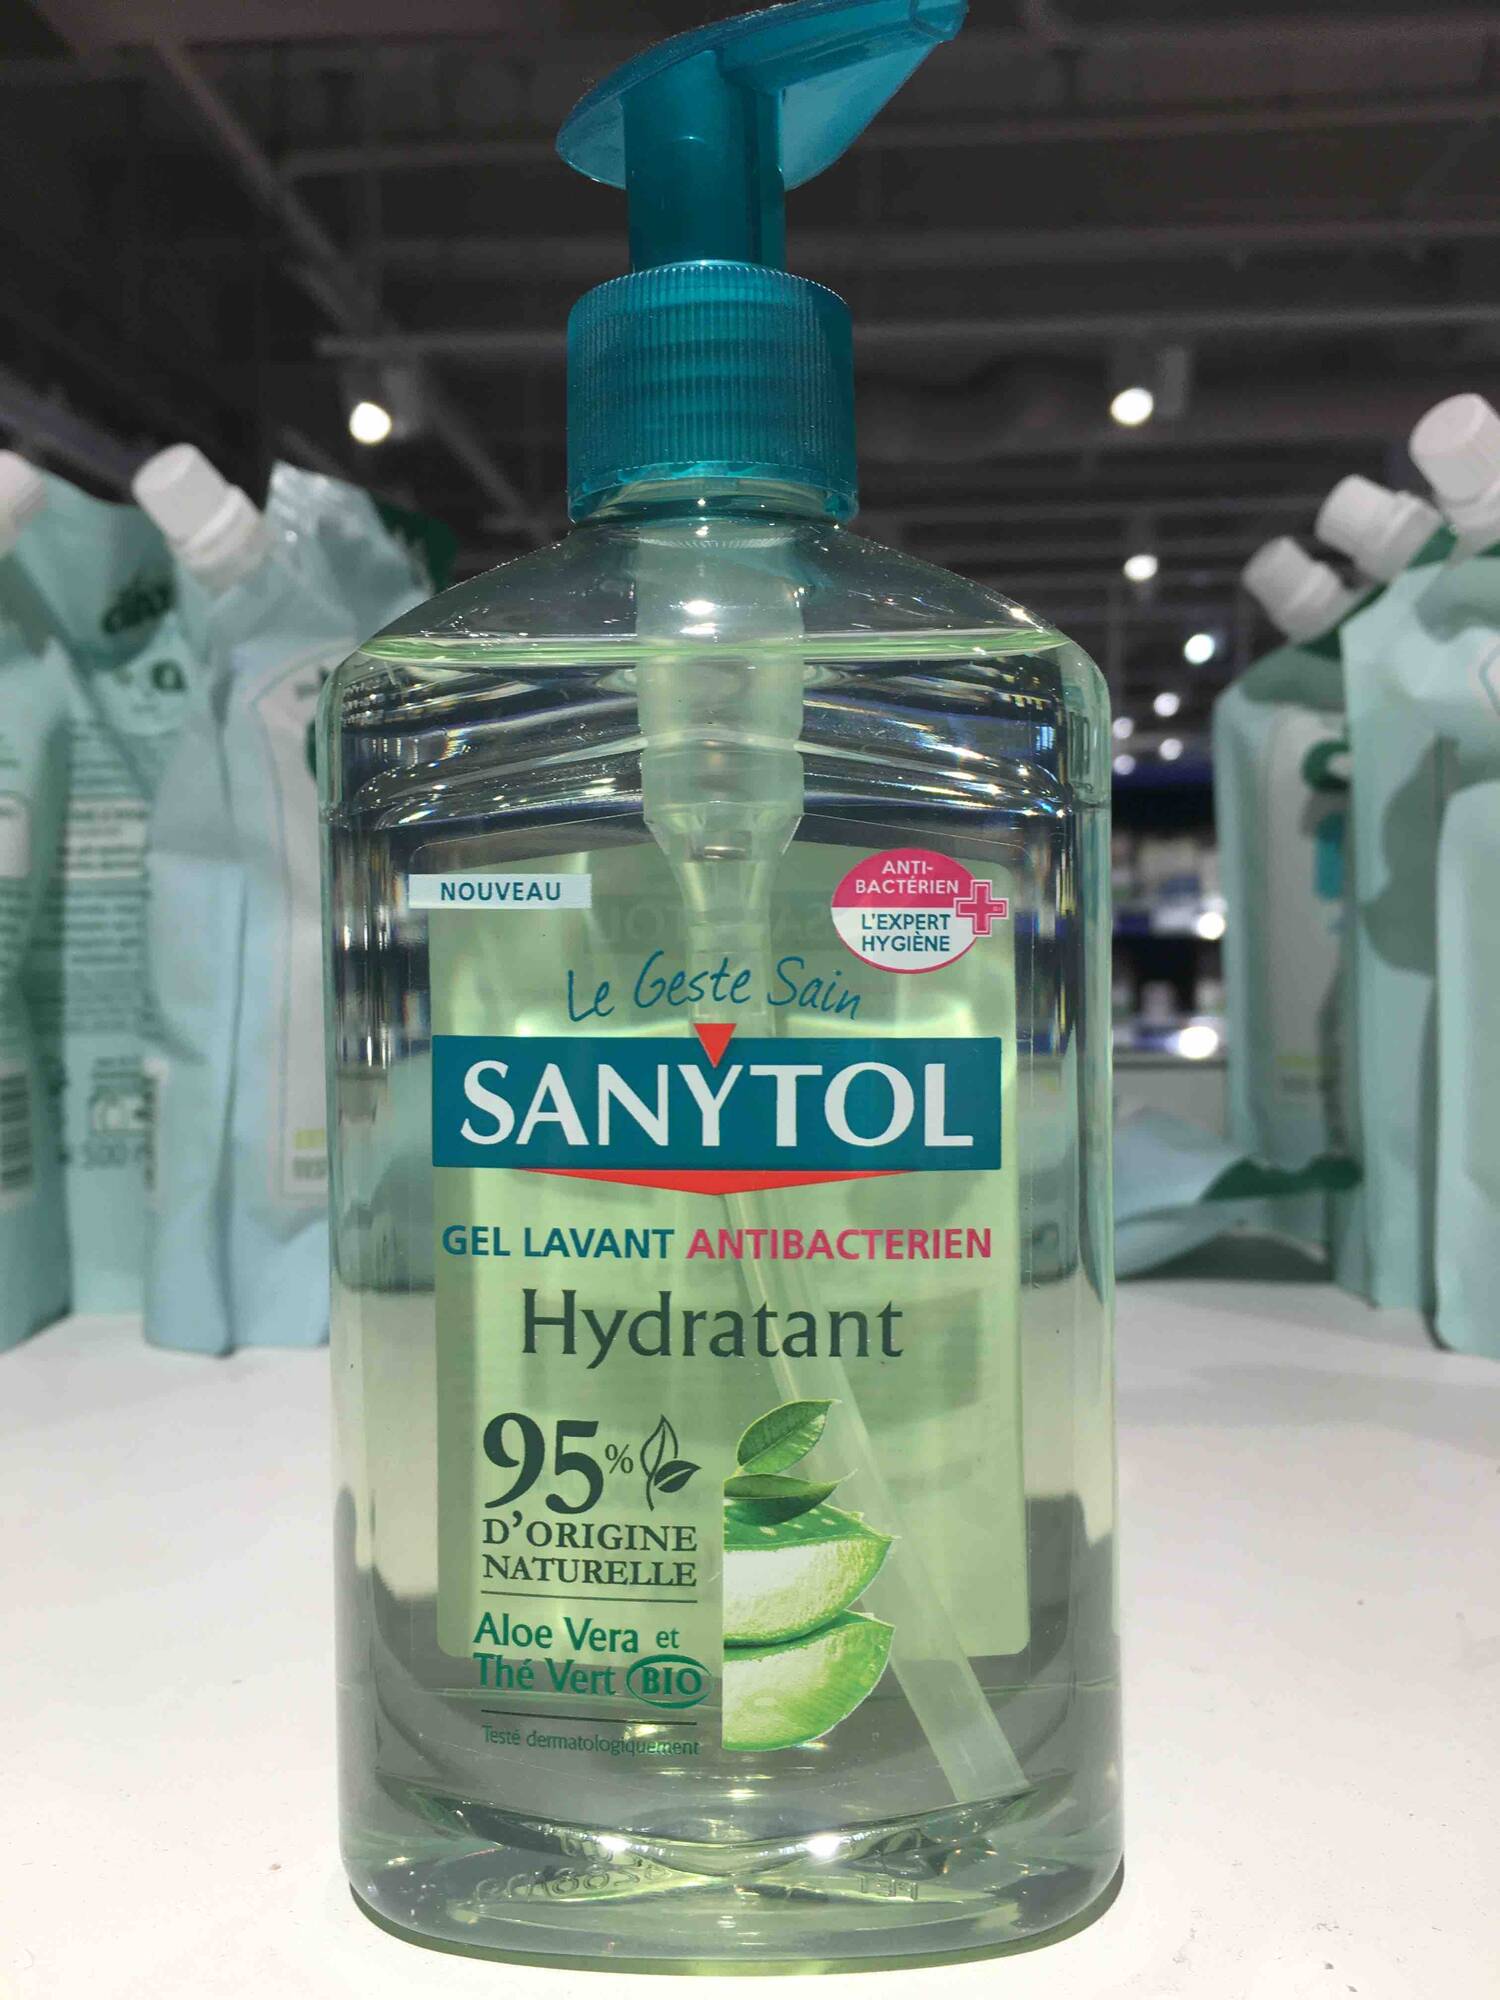 SANYTOL - Le geste sain - Gel lavant antibacterien hydratant